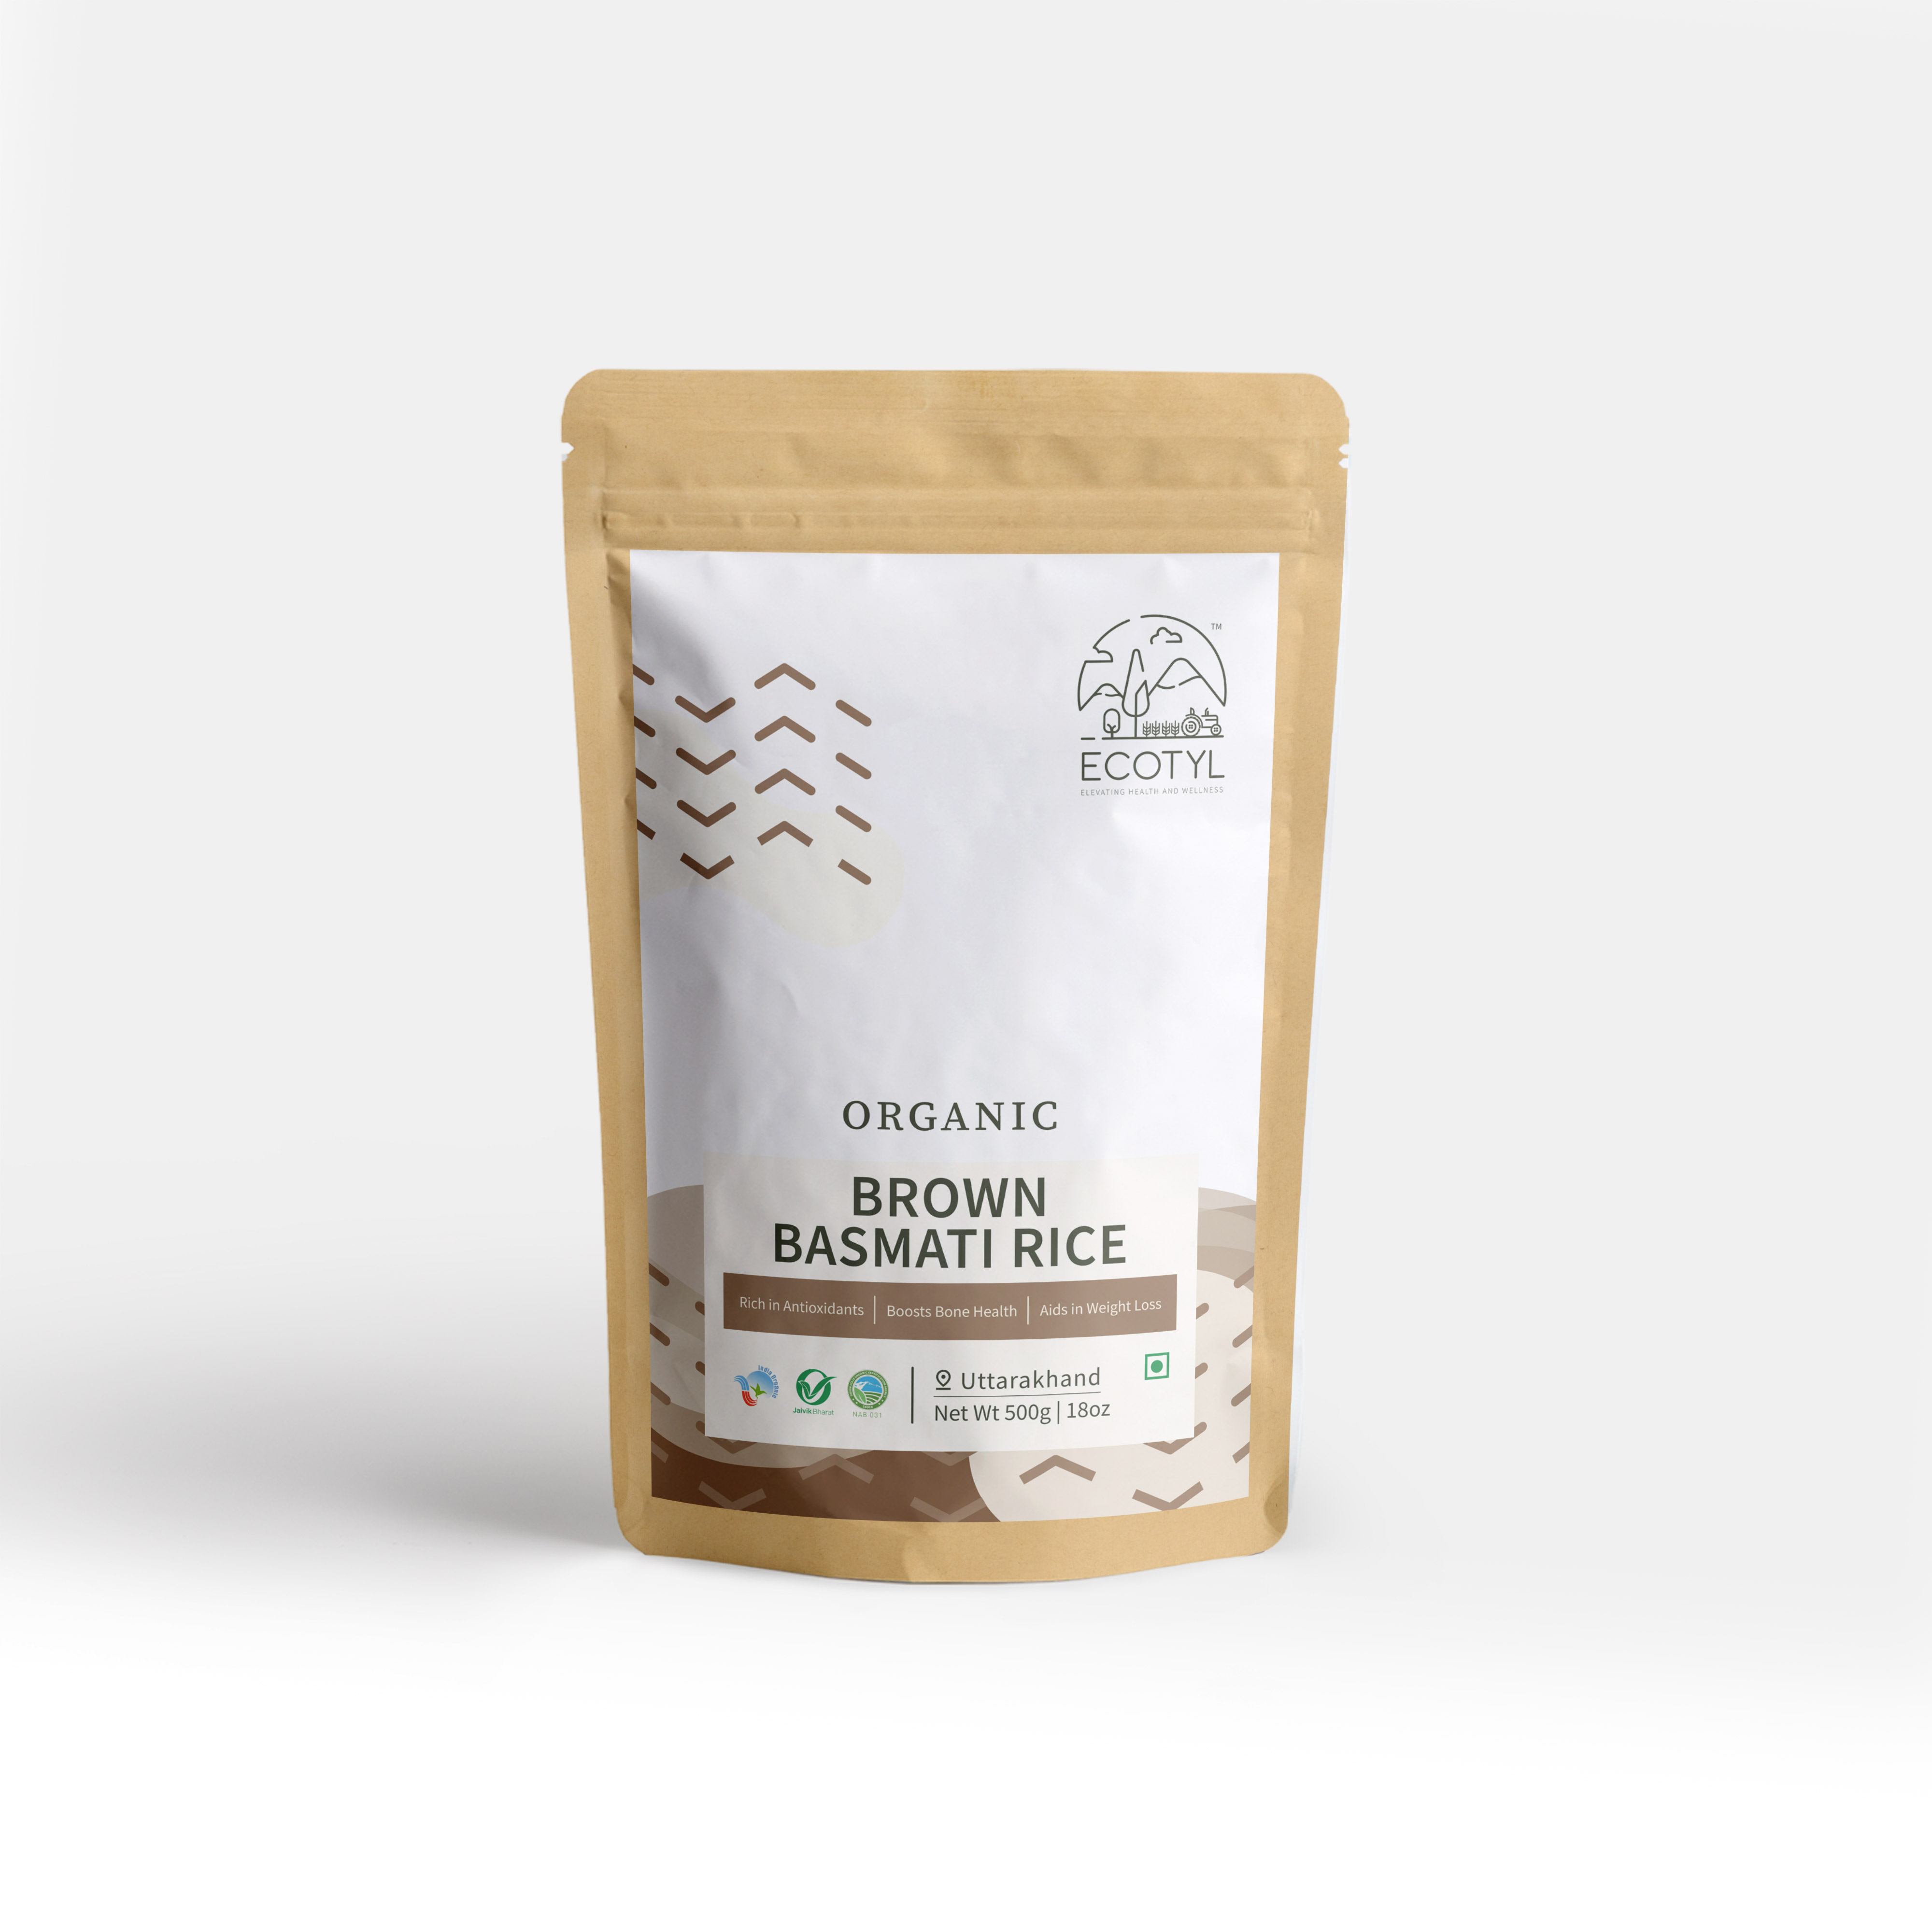 Buy Ecotyl Organic Brown Basmati Rice - 500 g at Best Price Online